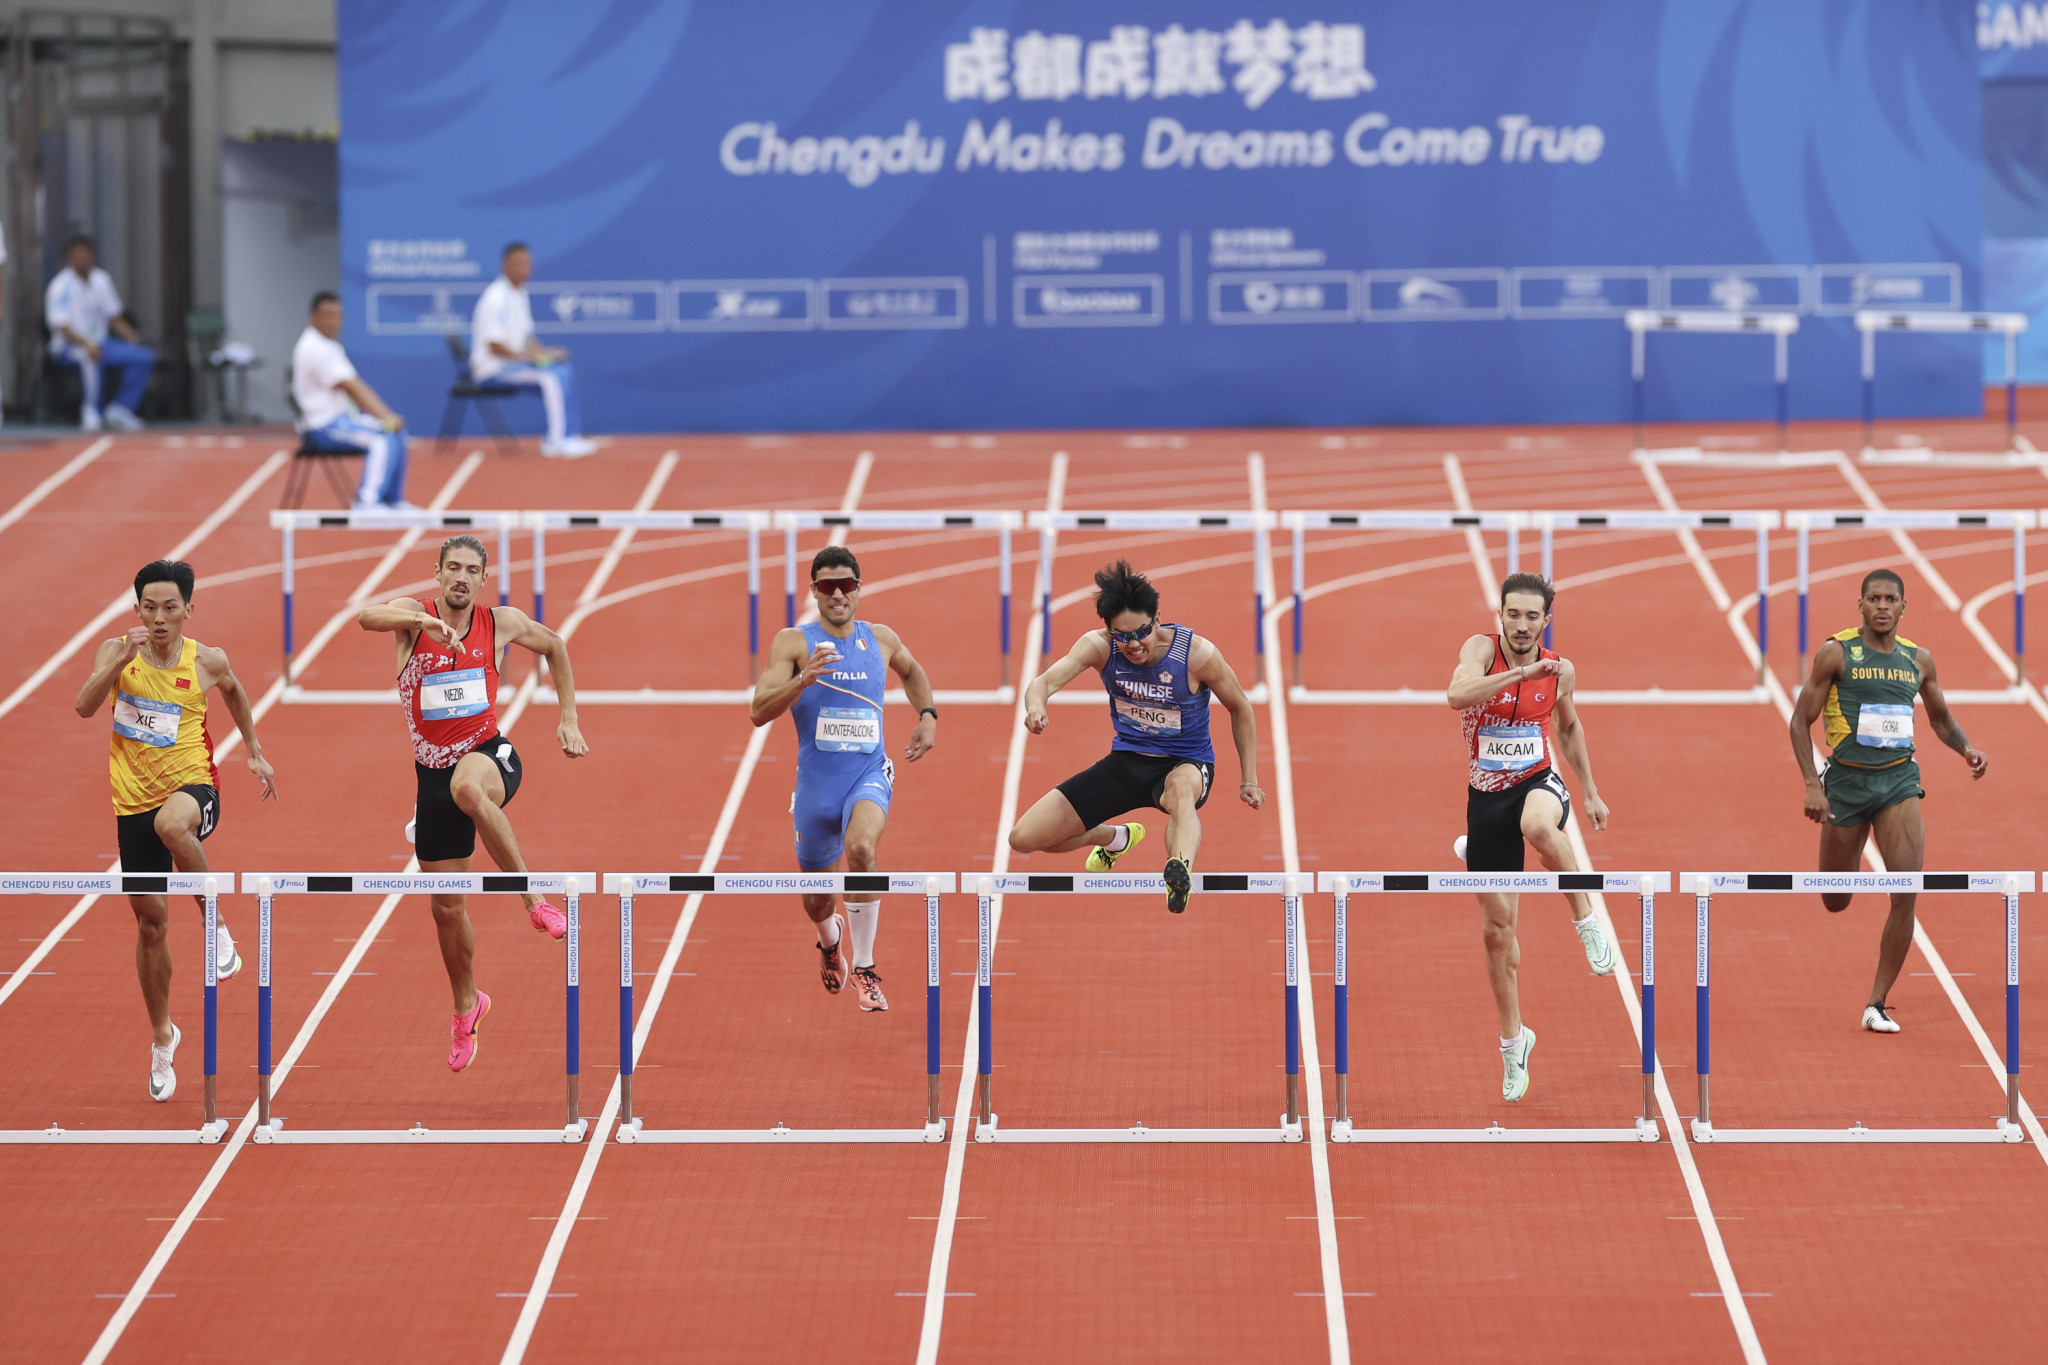 Peng Ming-yang of Chinese Taipei, third from right, won the men's 400m hurdles gold medal ©Chengdu 2021